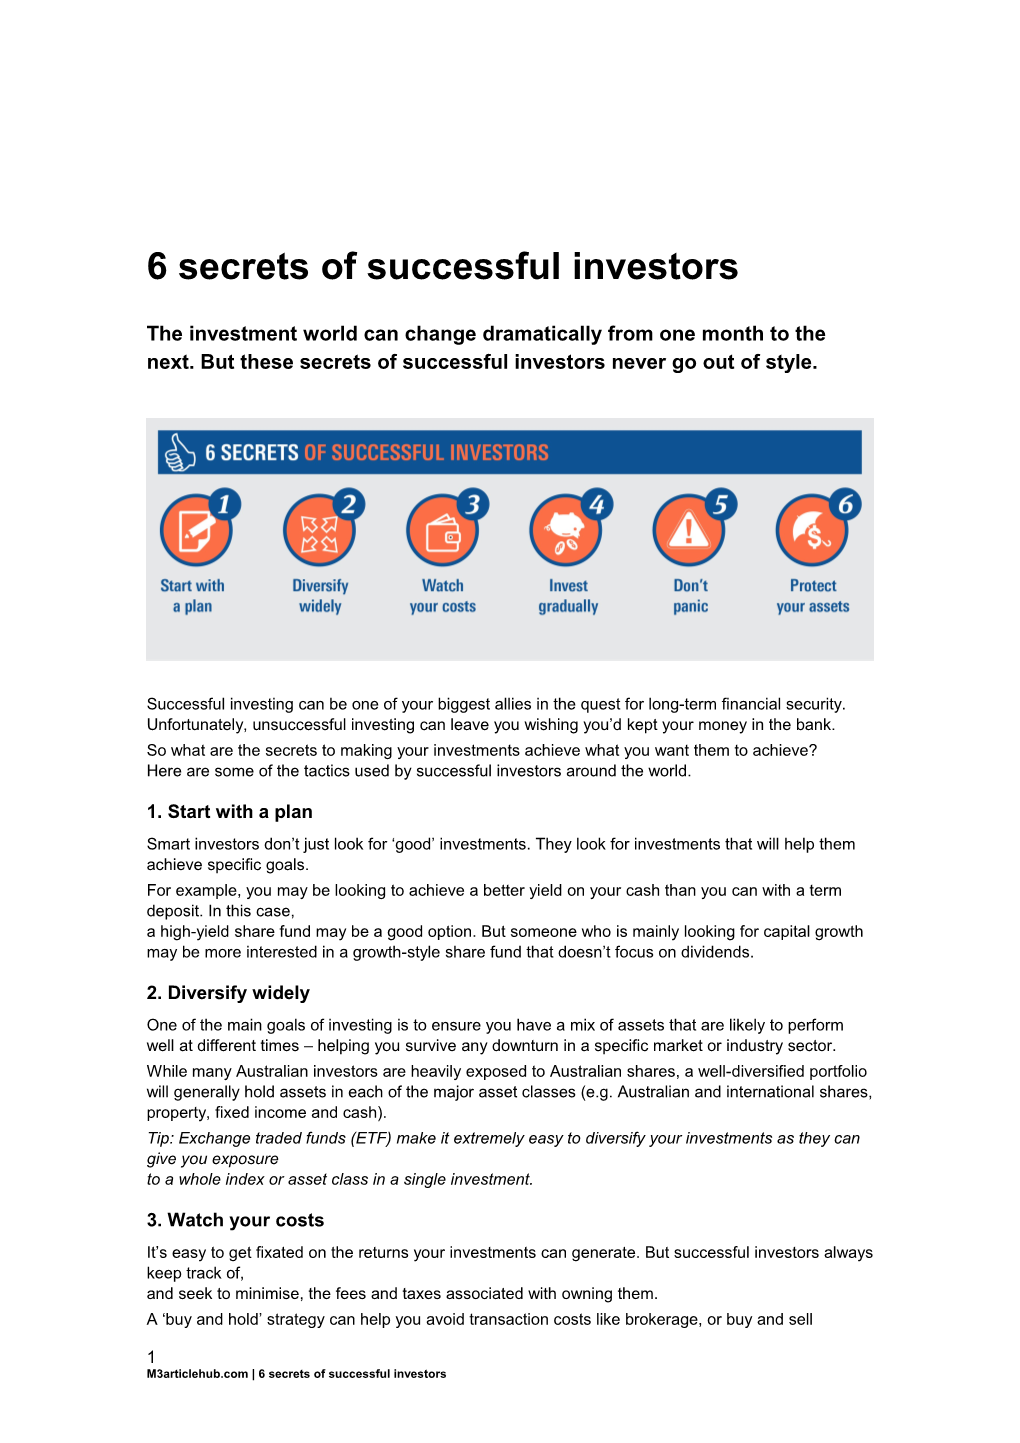 6 Secrets of Successful Investors